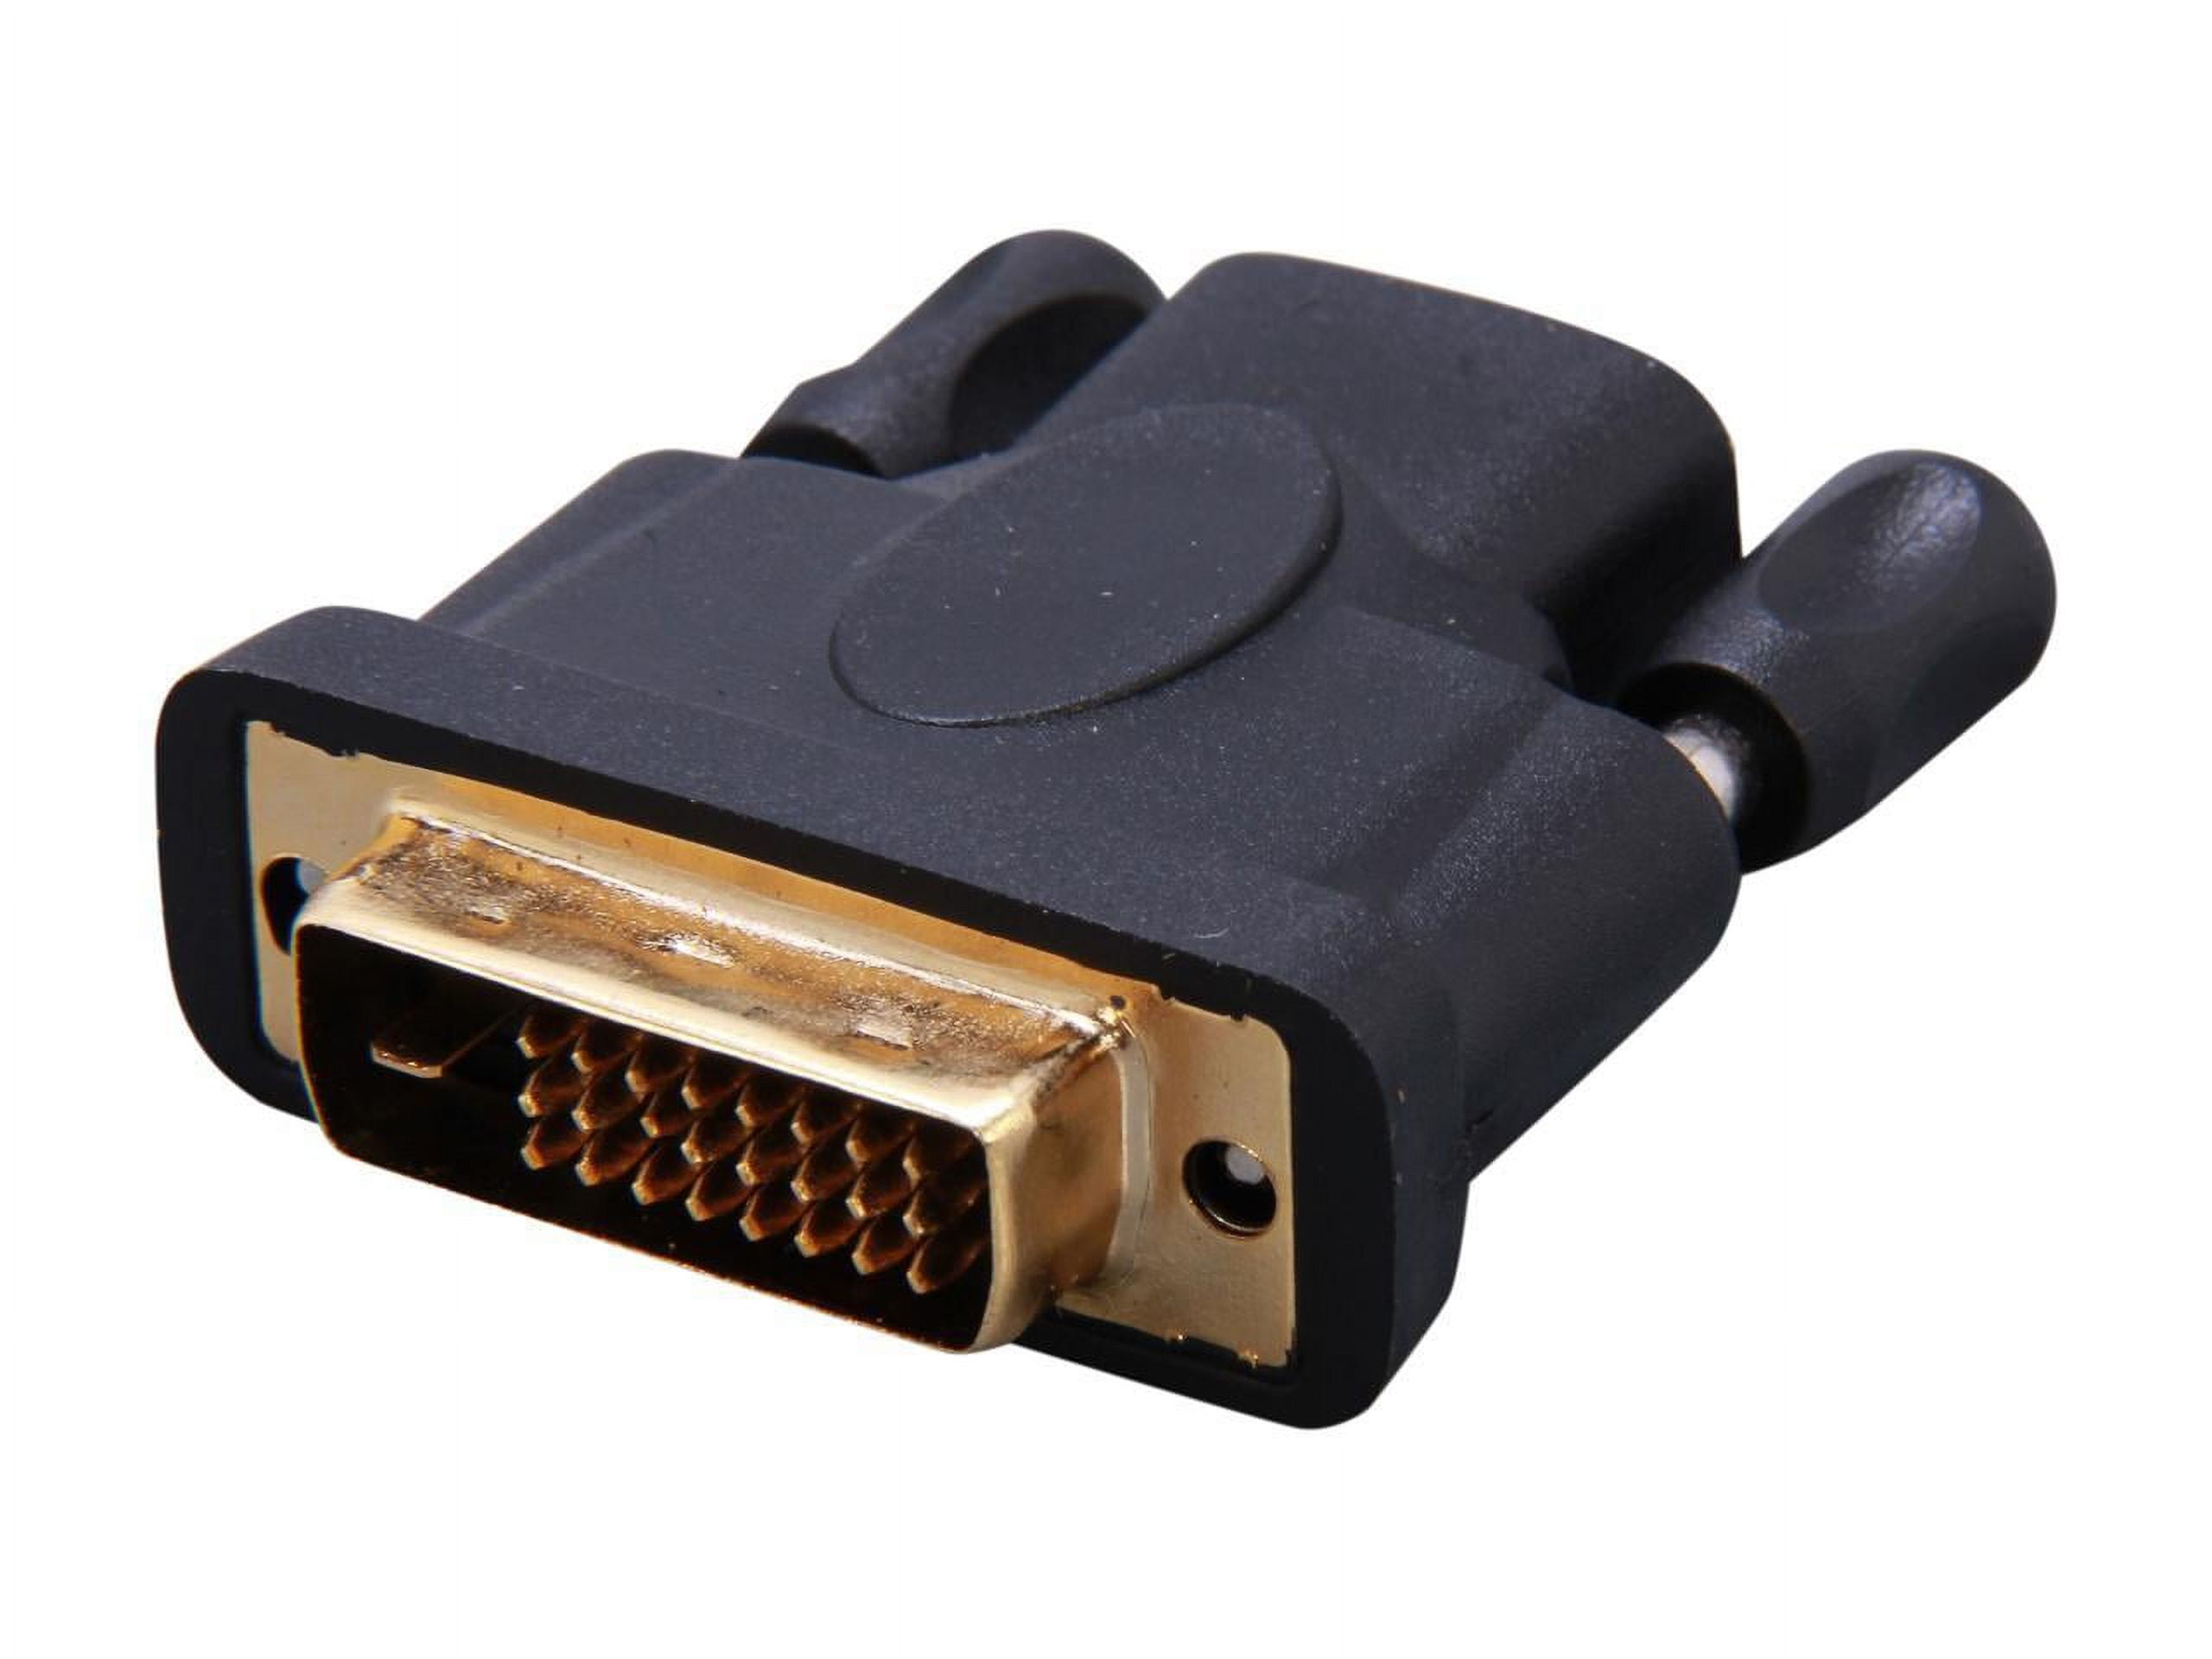 Monoprice DisplayPort 1.2a to 4K HDMI, Dual Link DVI, and VGA Passive  Adapter, Black 